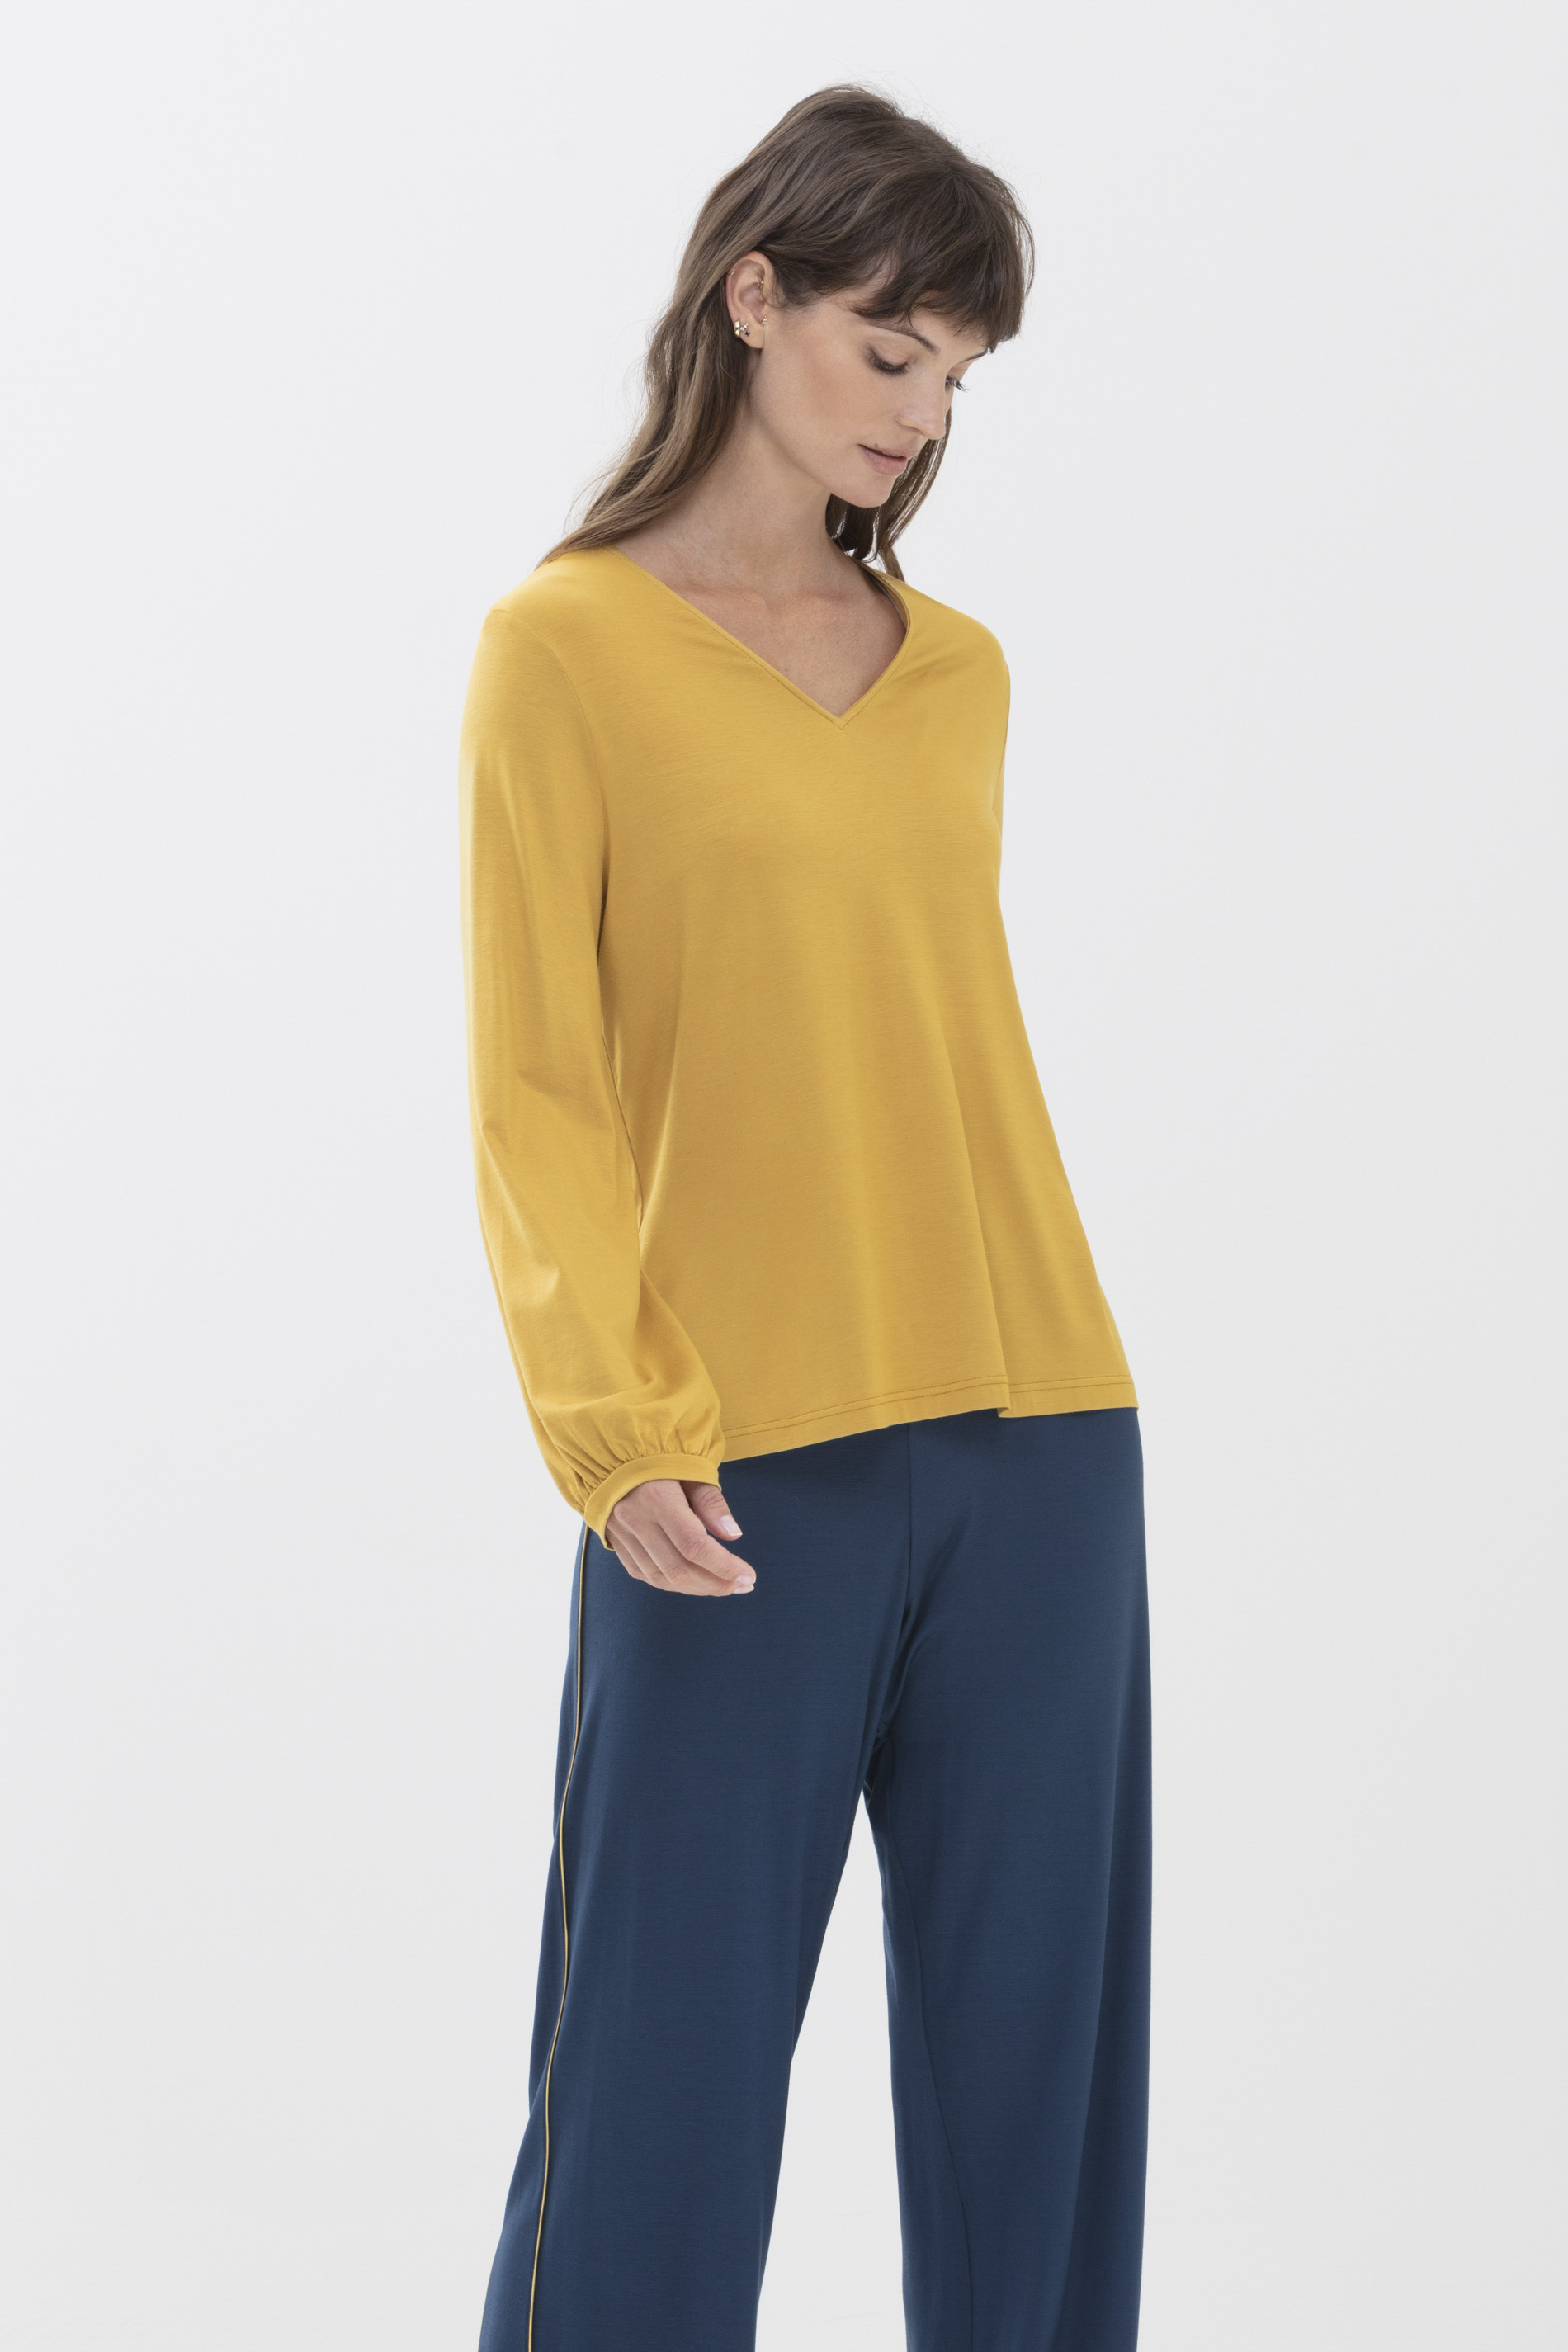 Shirt Wintergold Serie Alena Frontansicht | mey®